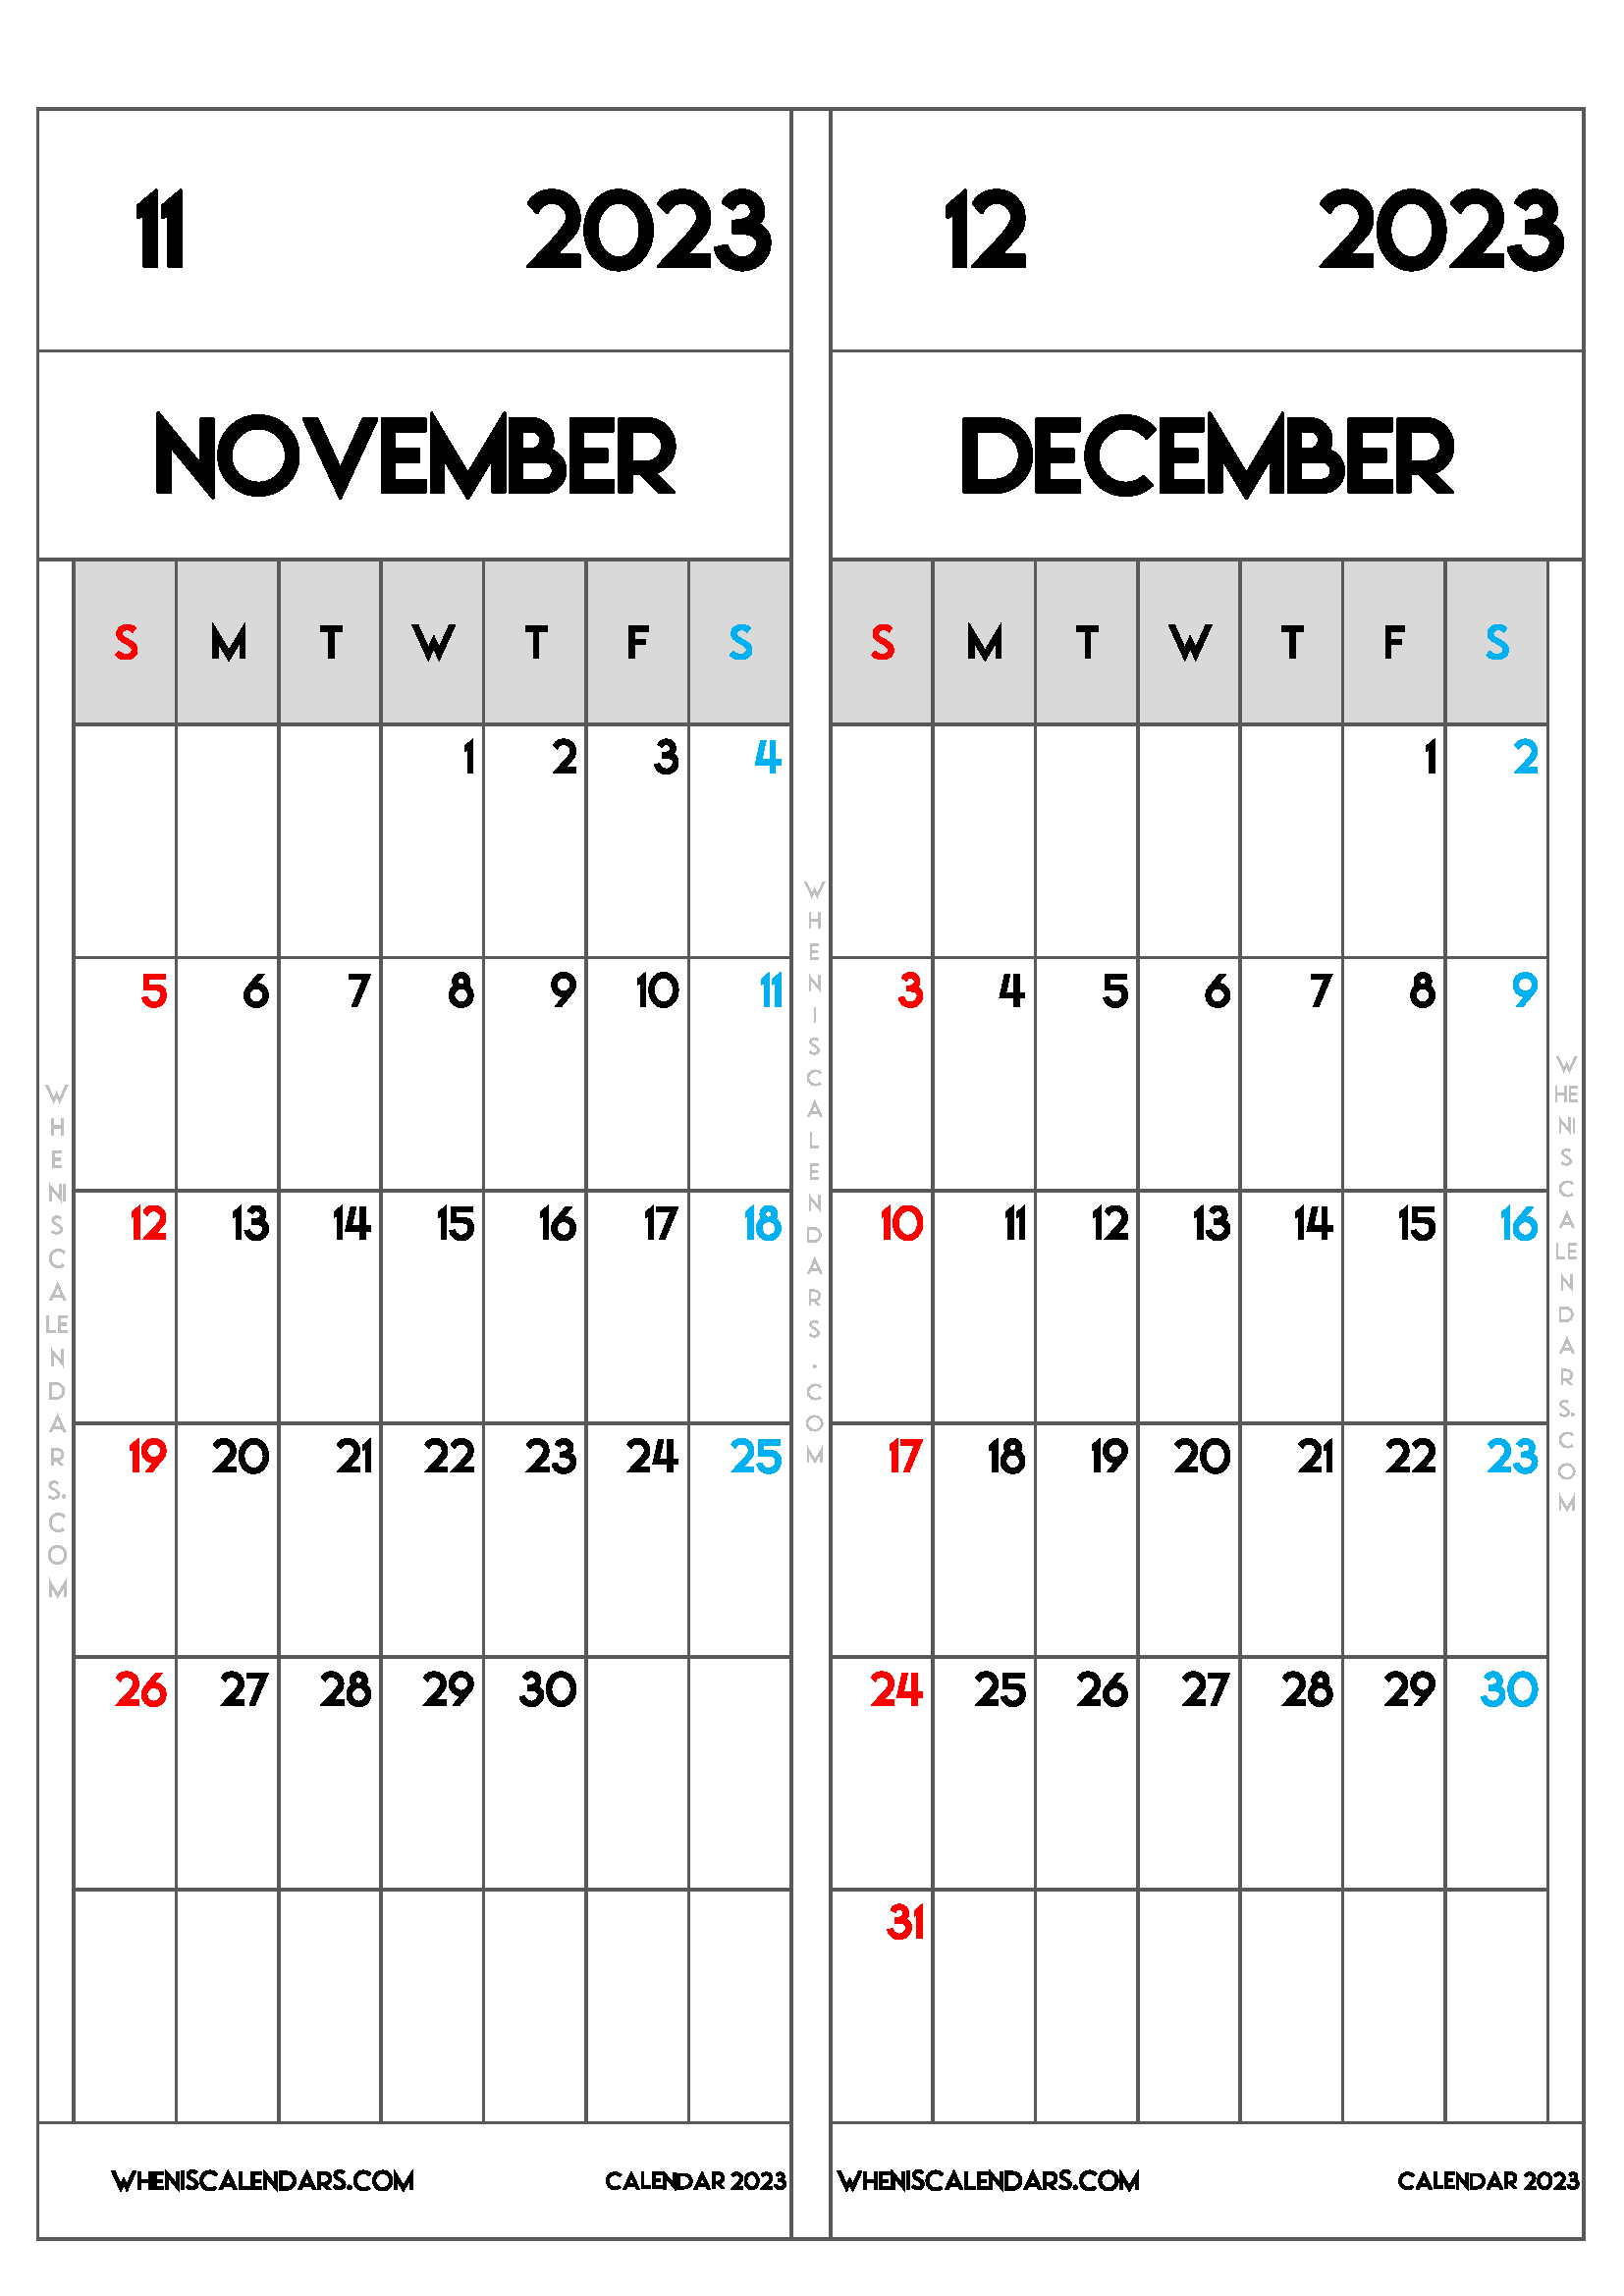 Download Printable November and December 2023 Calendar as PDF and PNG Image